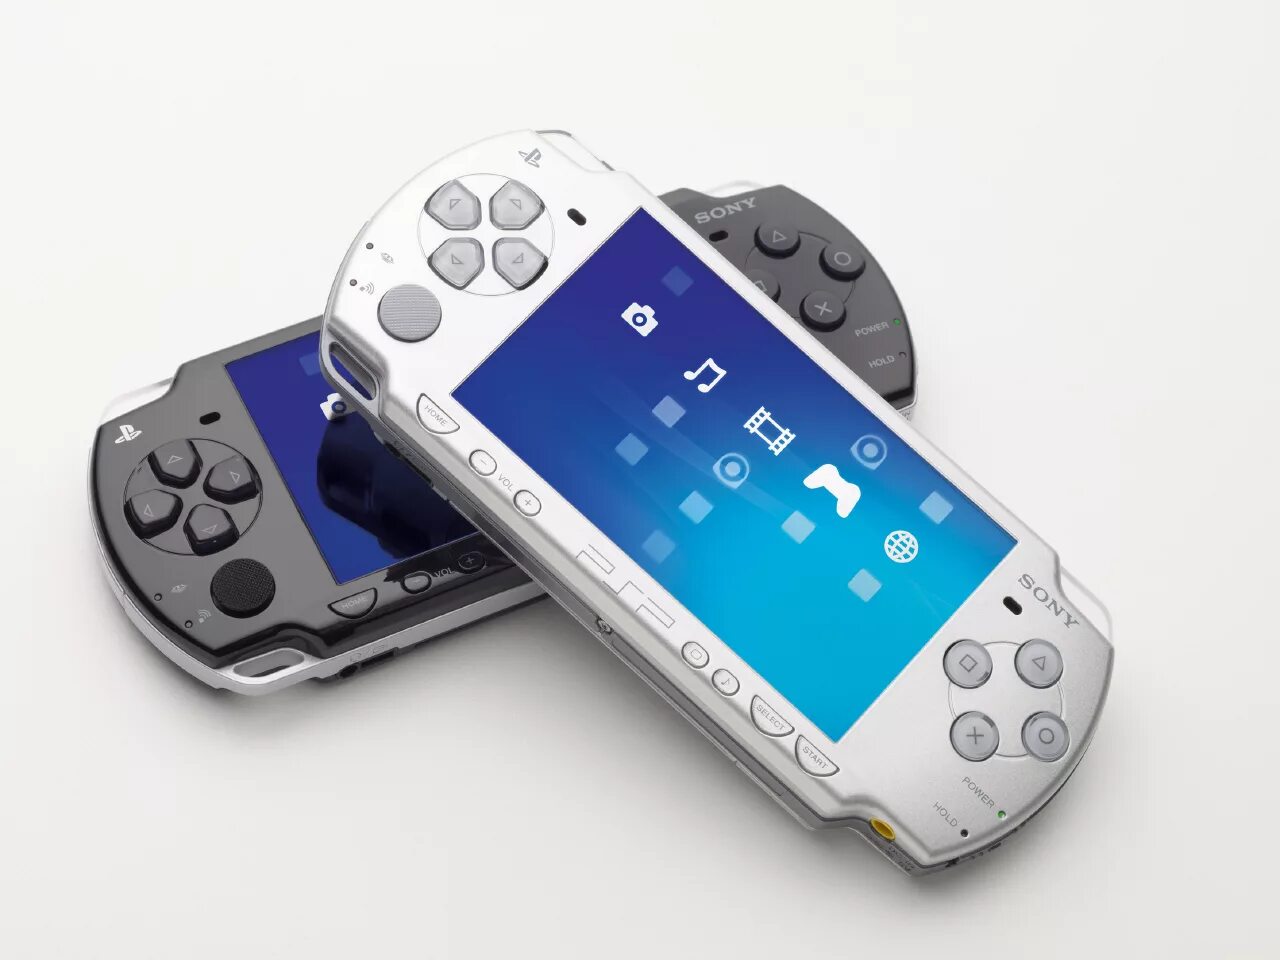 Sony PLAYSTATION Portable Slim & Lite PSP-3000. Sony PLAYSTATION Portable Slim & Lite. PSP 1000 Slim. PLAYSTATION Portable 2000 (Slim and Lite). Почему игровая приставка